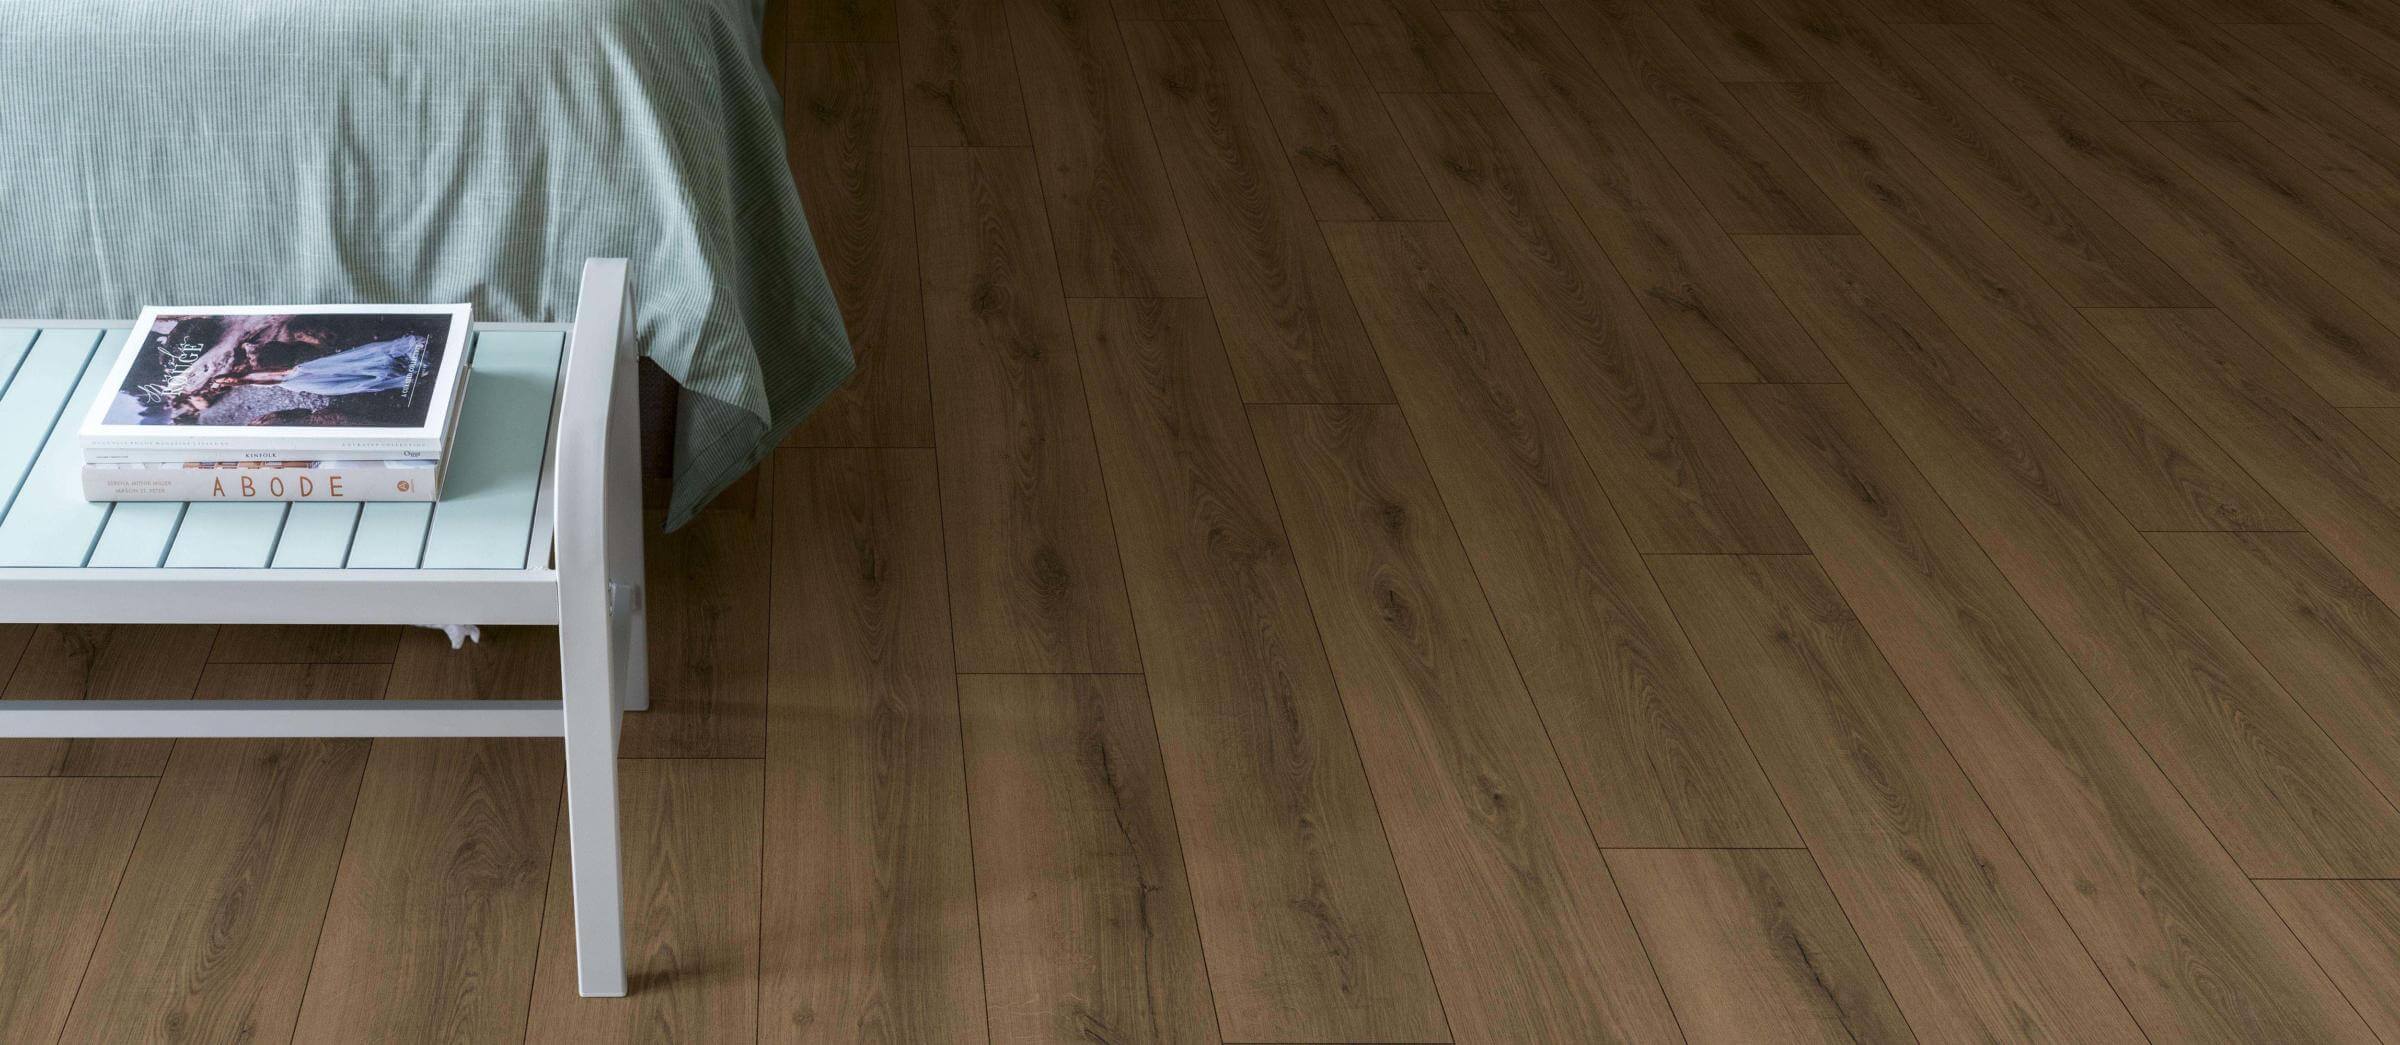 Overview Premium Floors Quick-Step Classic Laminate Warm Brown Oak